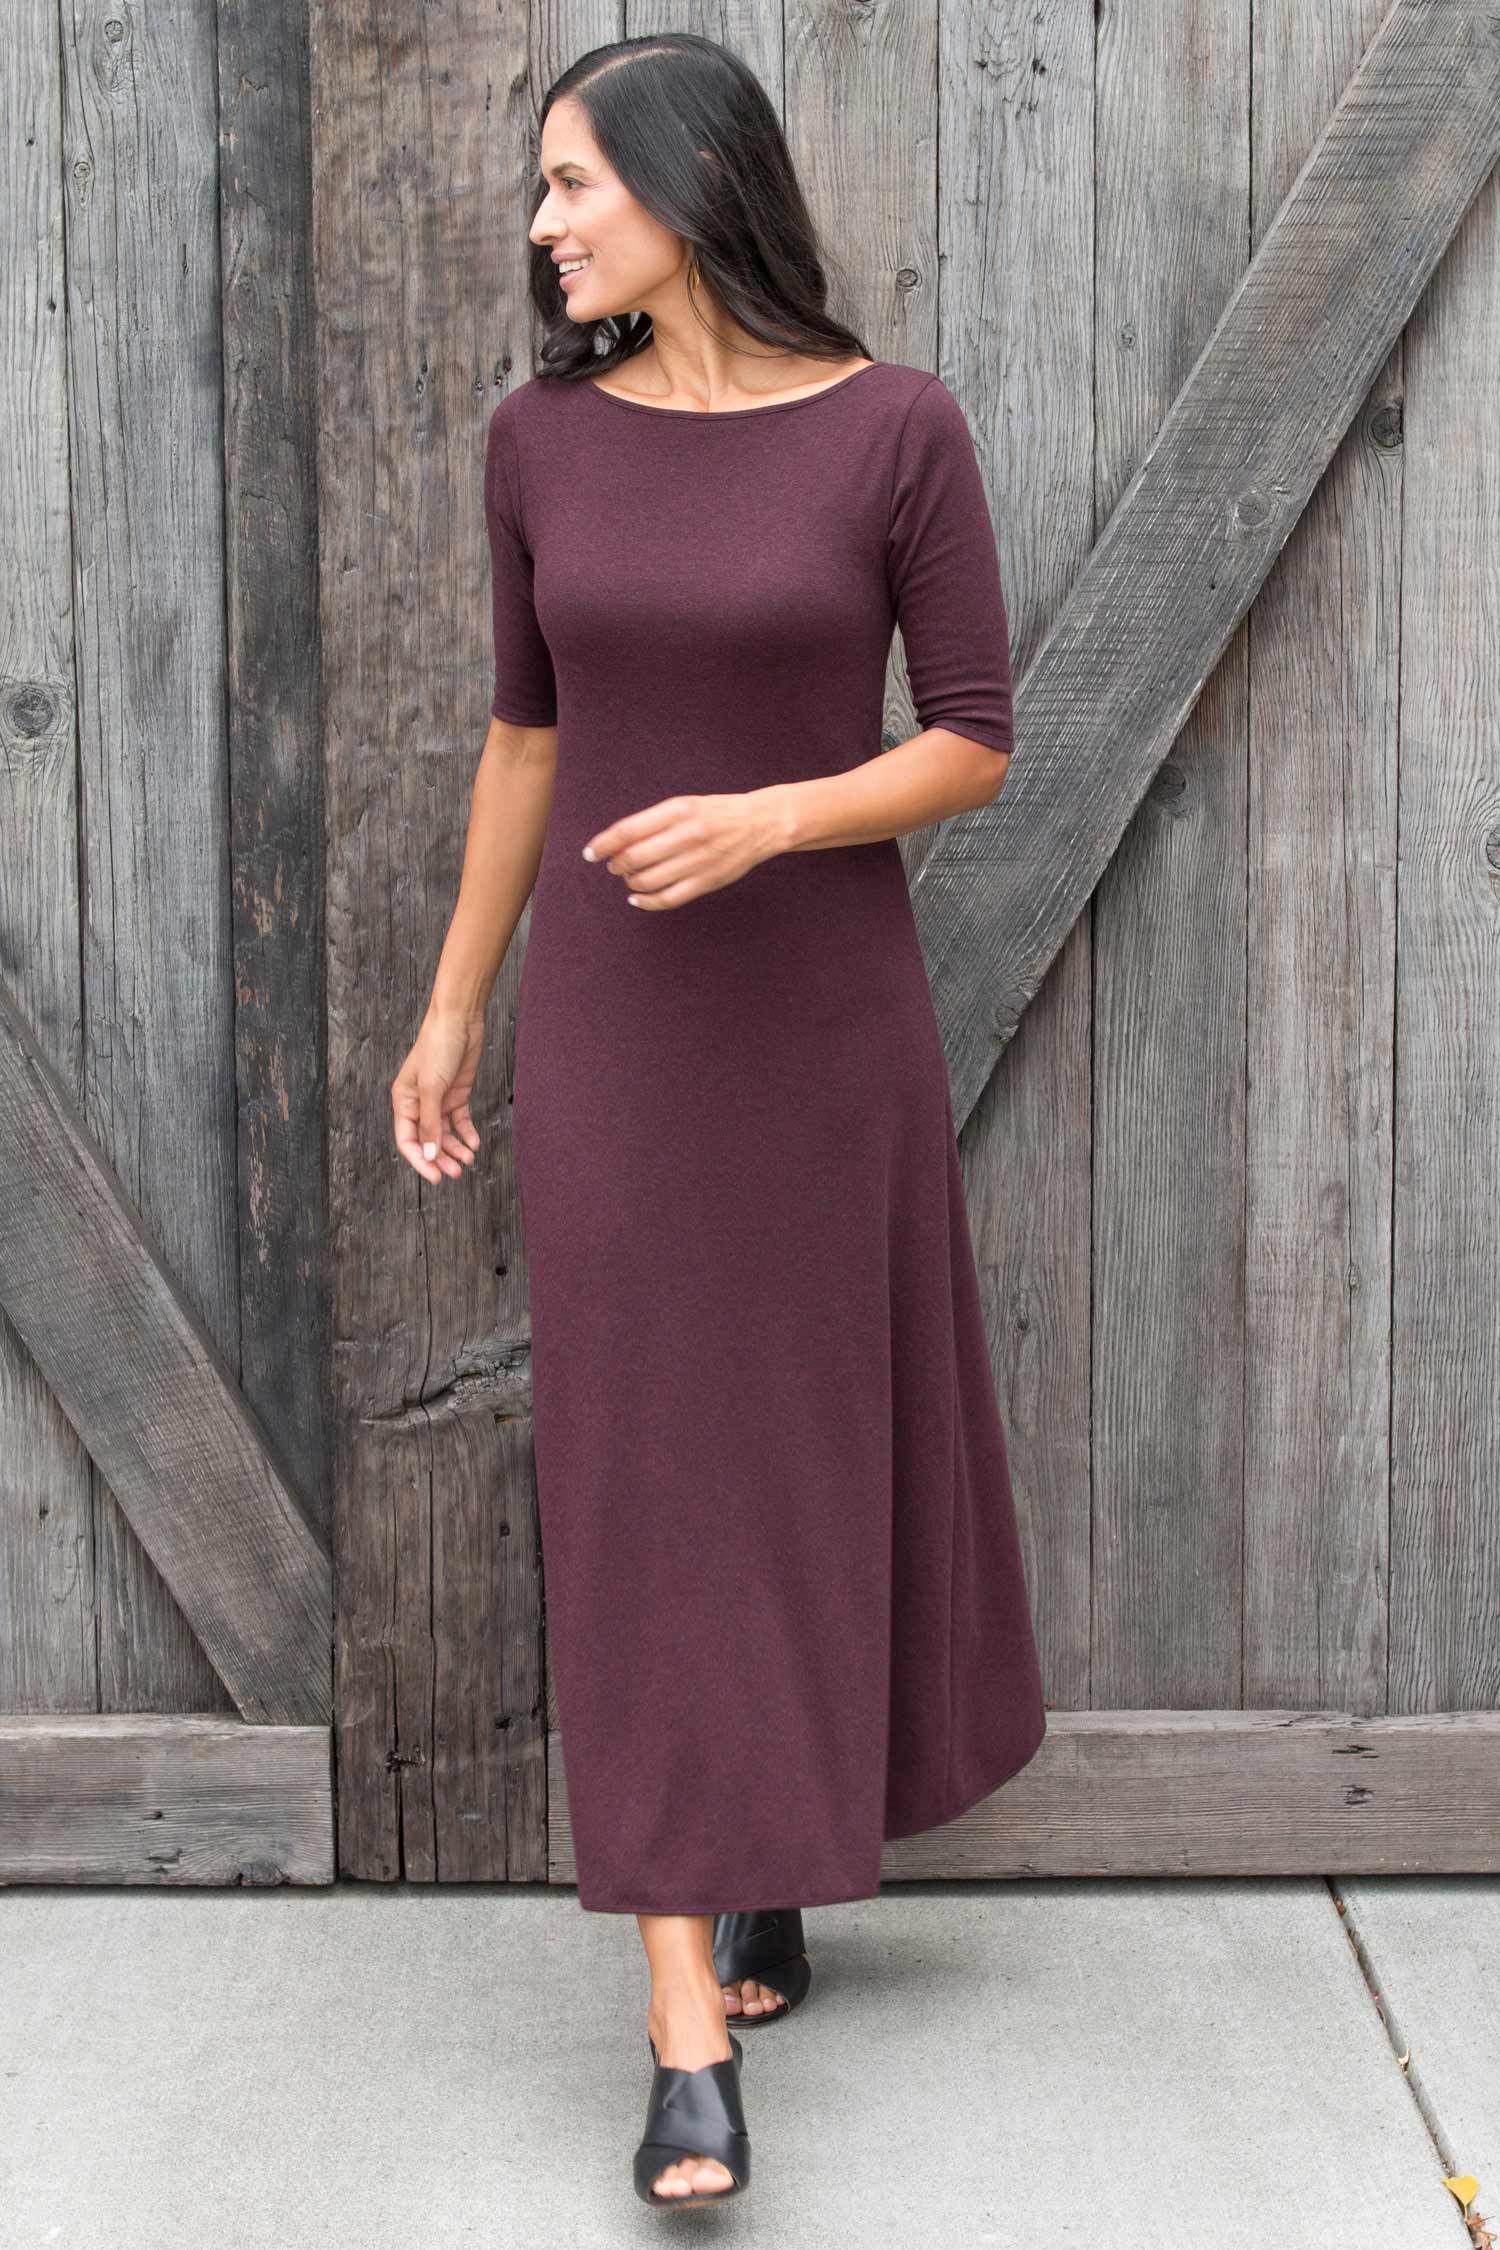 Womens Elbow Sleeve Boatneck Dress | Burgundy | Organic Cotton Clothing